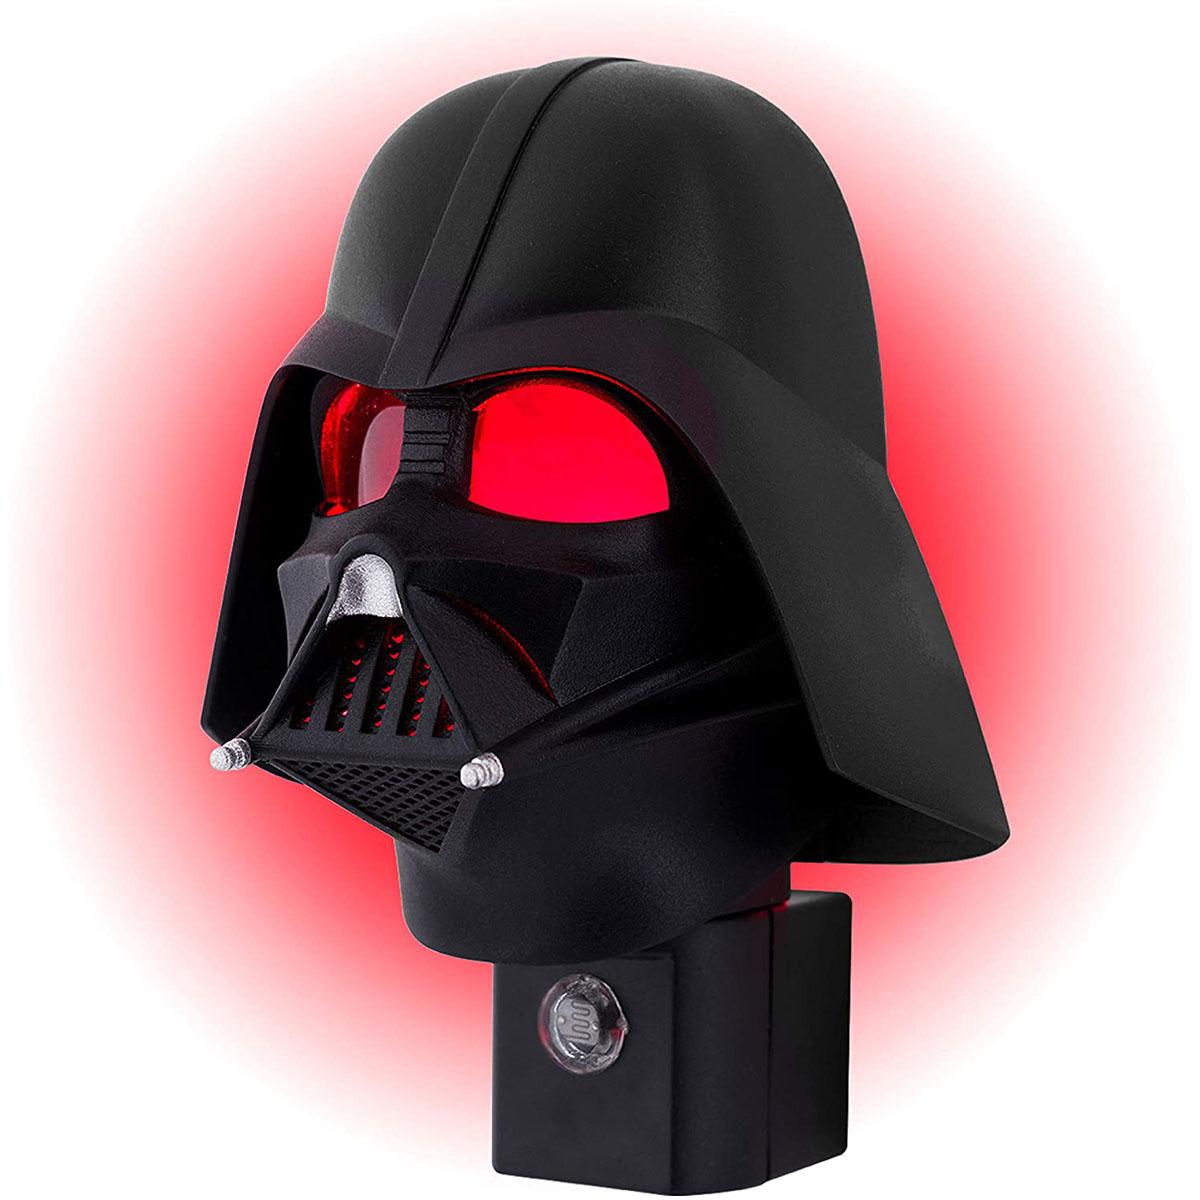 Star Wars Vader LED Night Light for $6.93